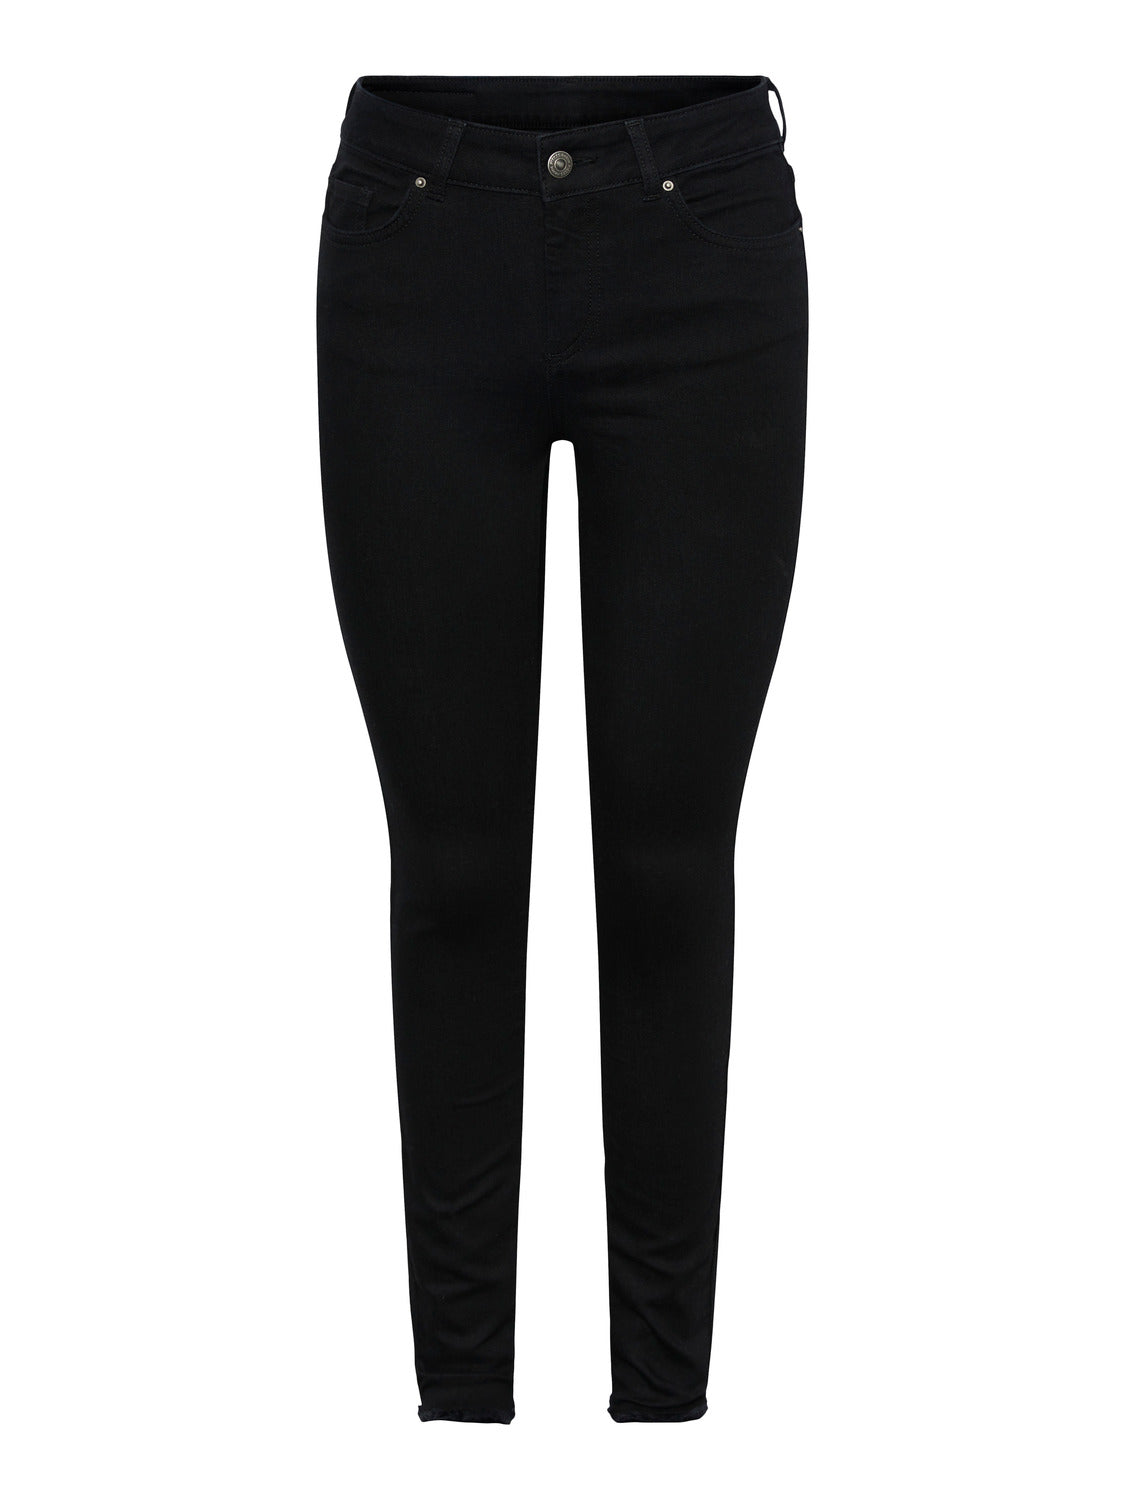 PCDELLY Jeans - Black Denim